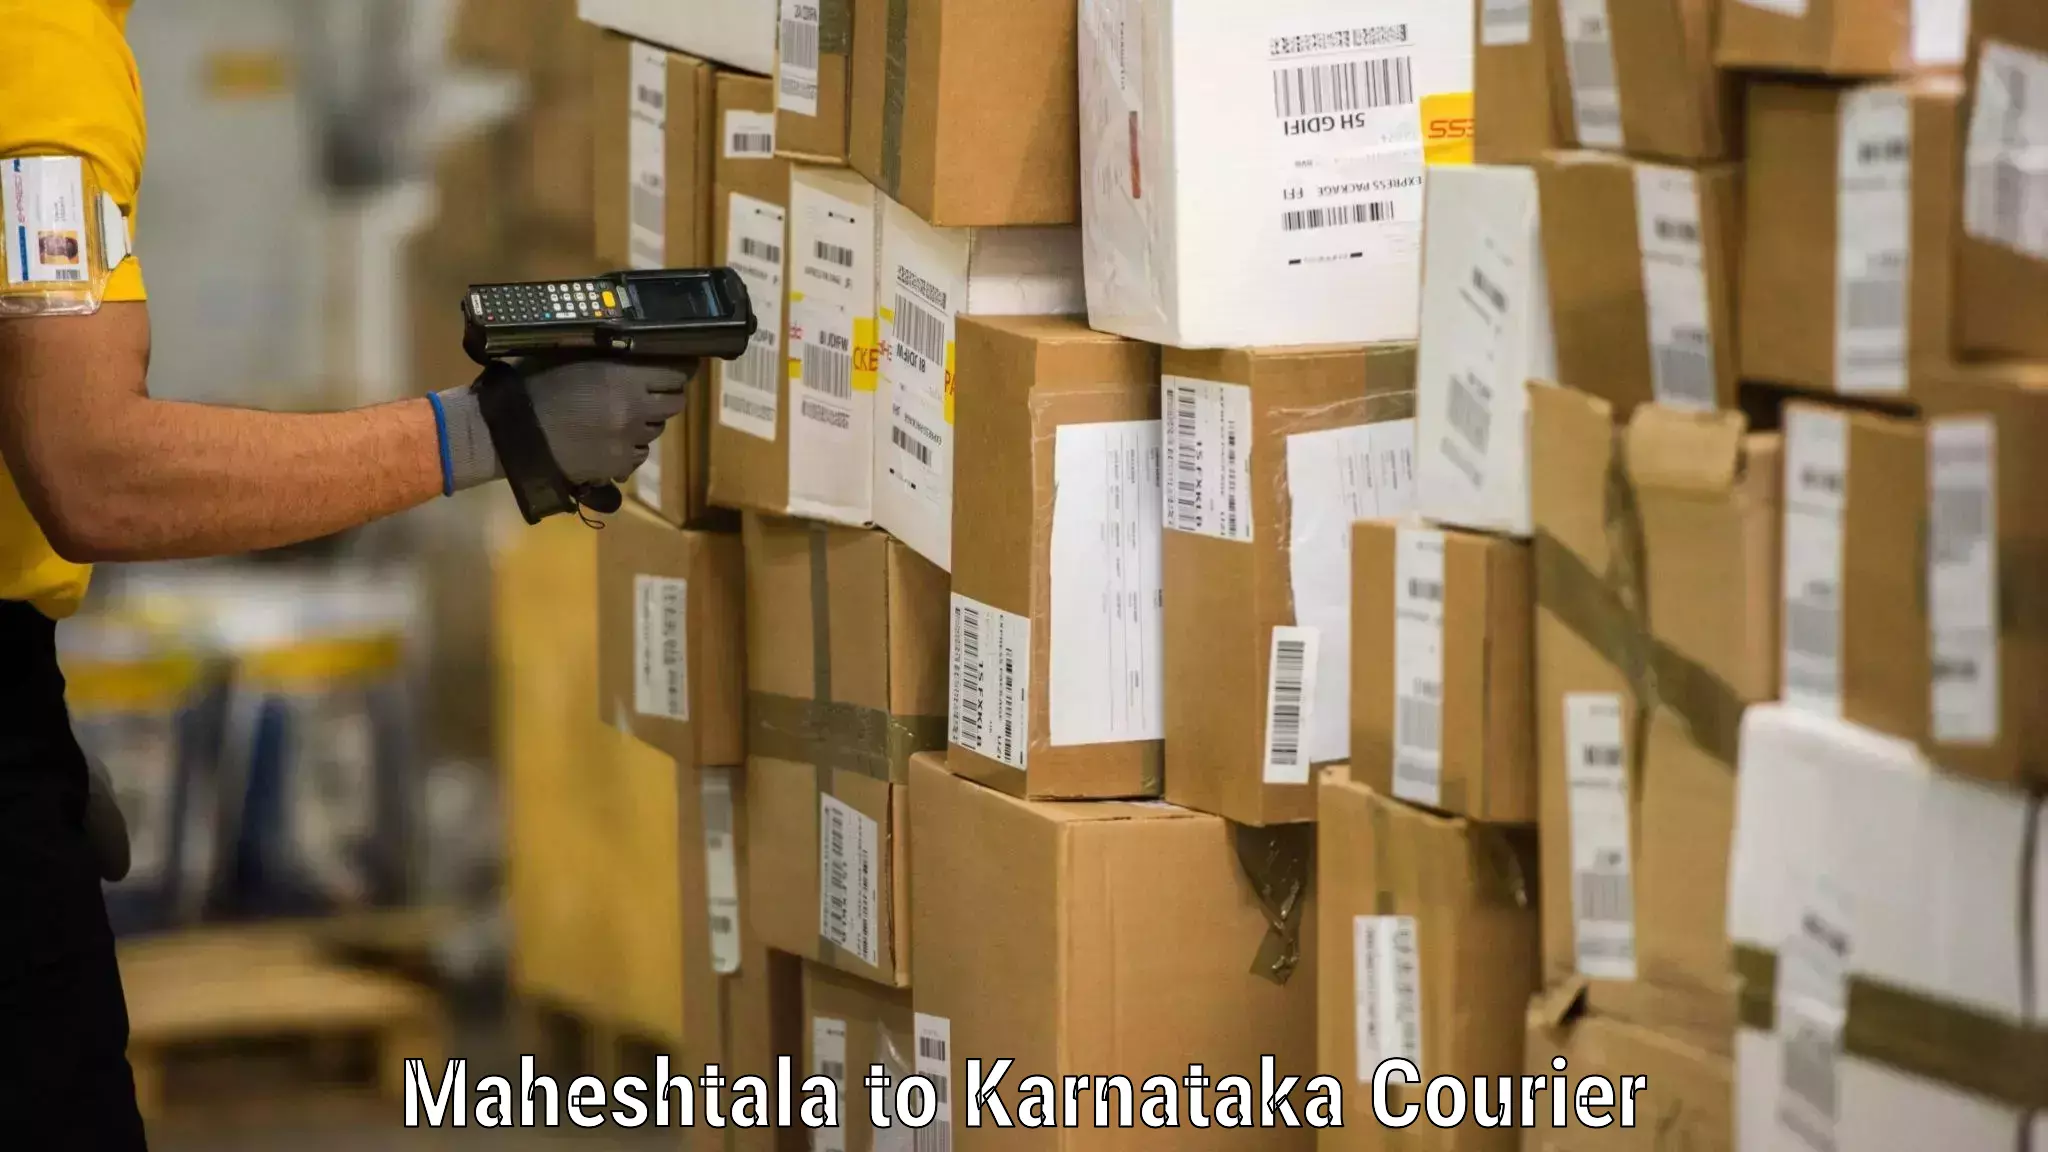 Furniture delivery service in Maheshtala to Karnataka